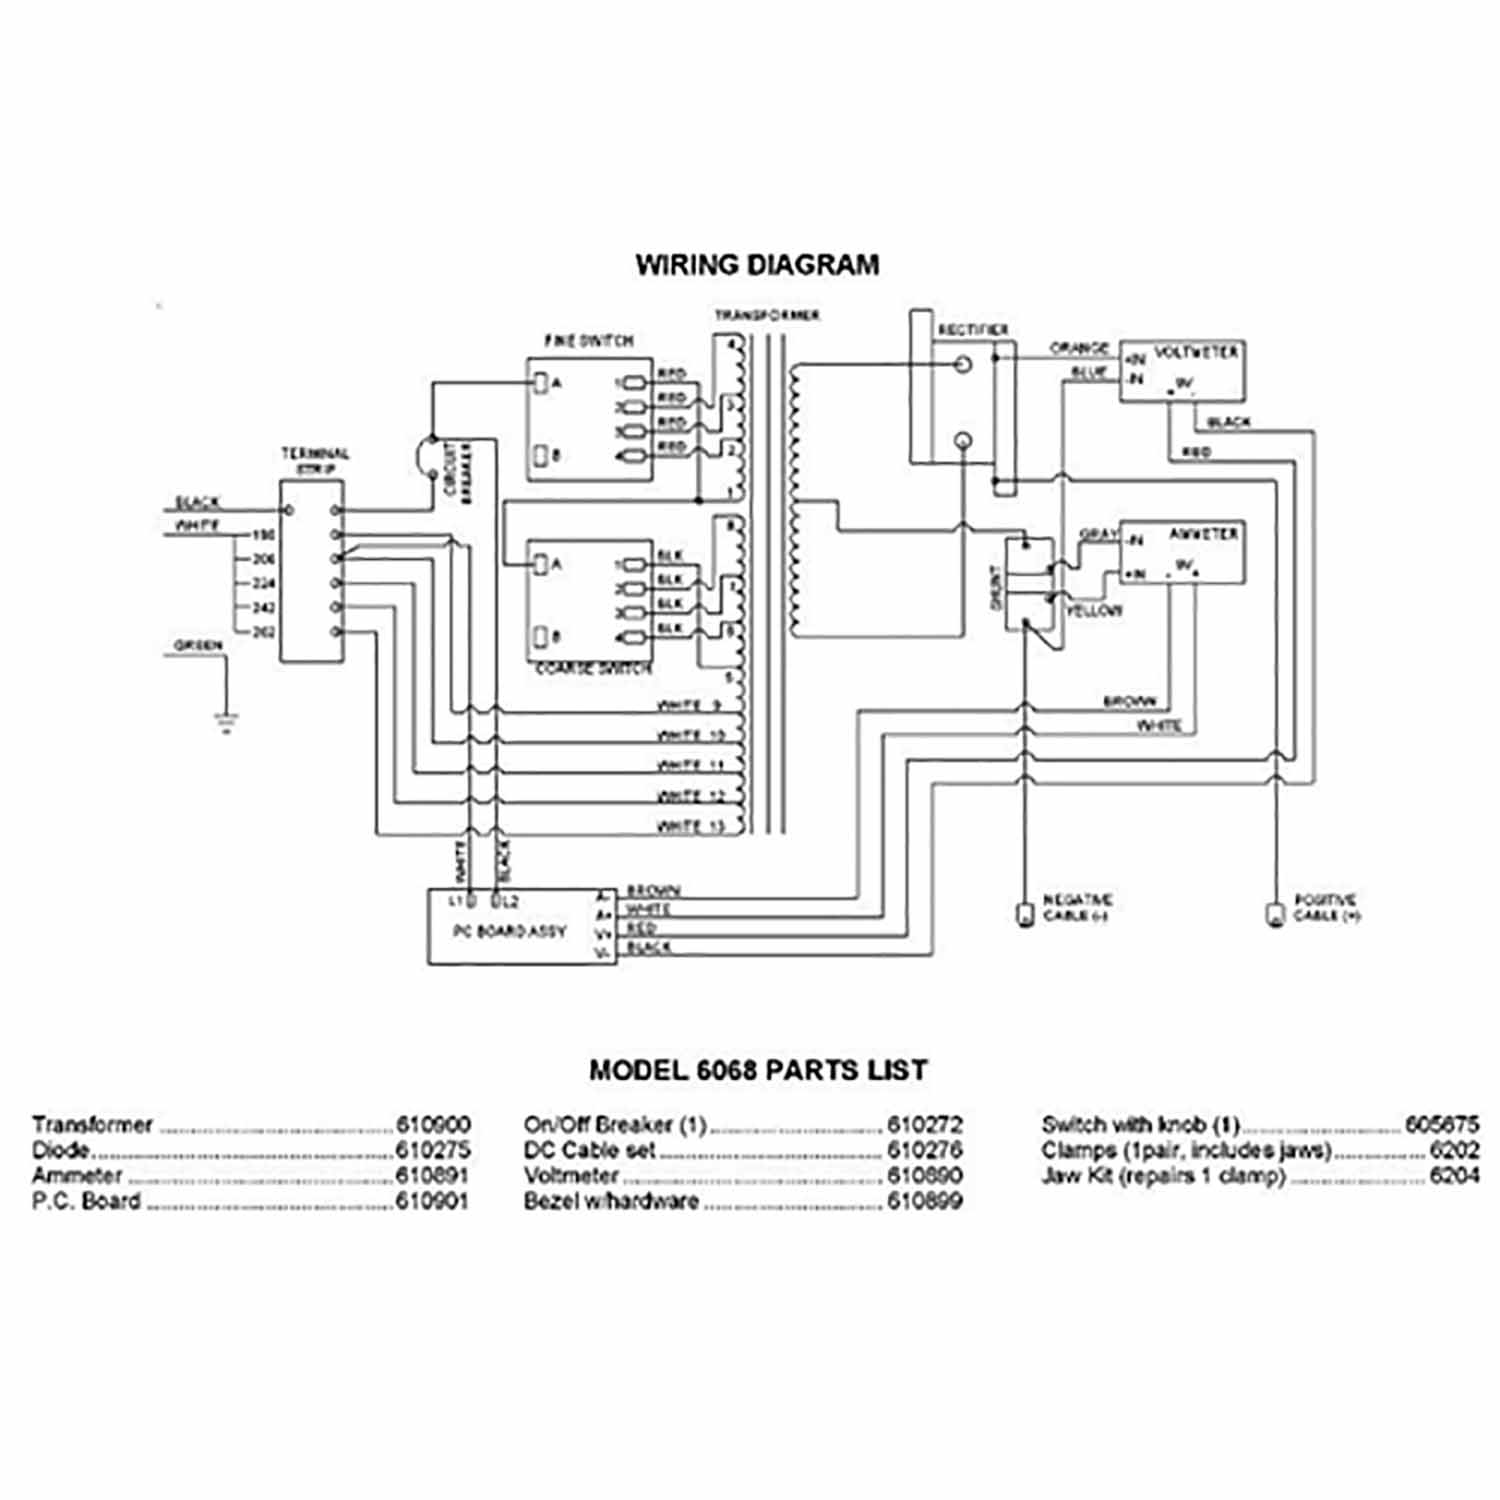 Associated Model 6068 Parts List,Wiring Diagram aquastat control wiring schematic 